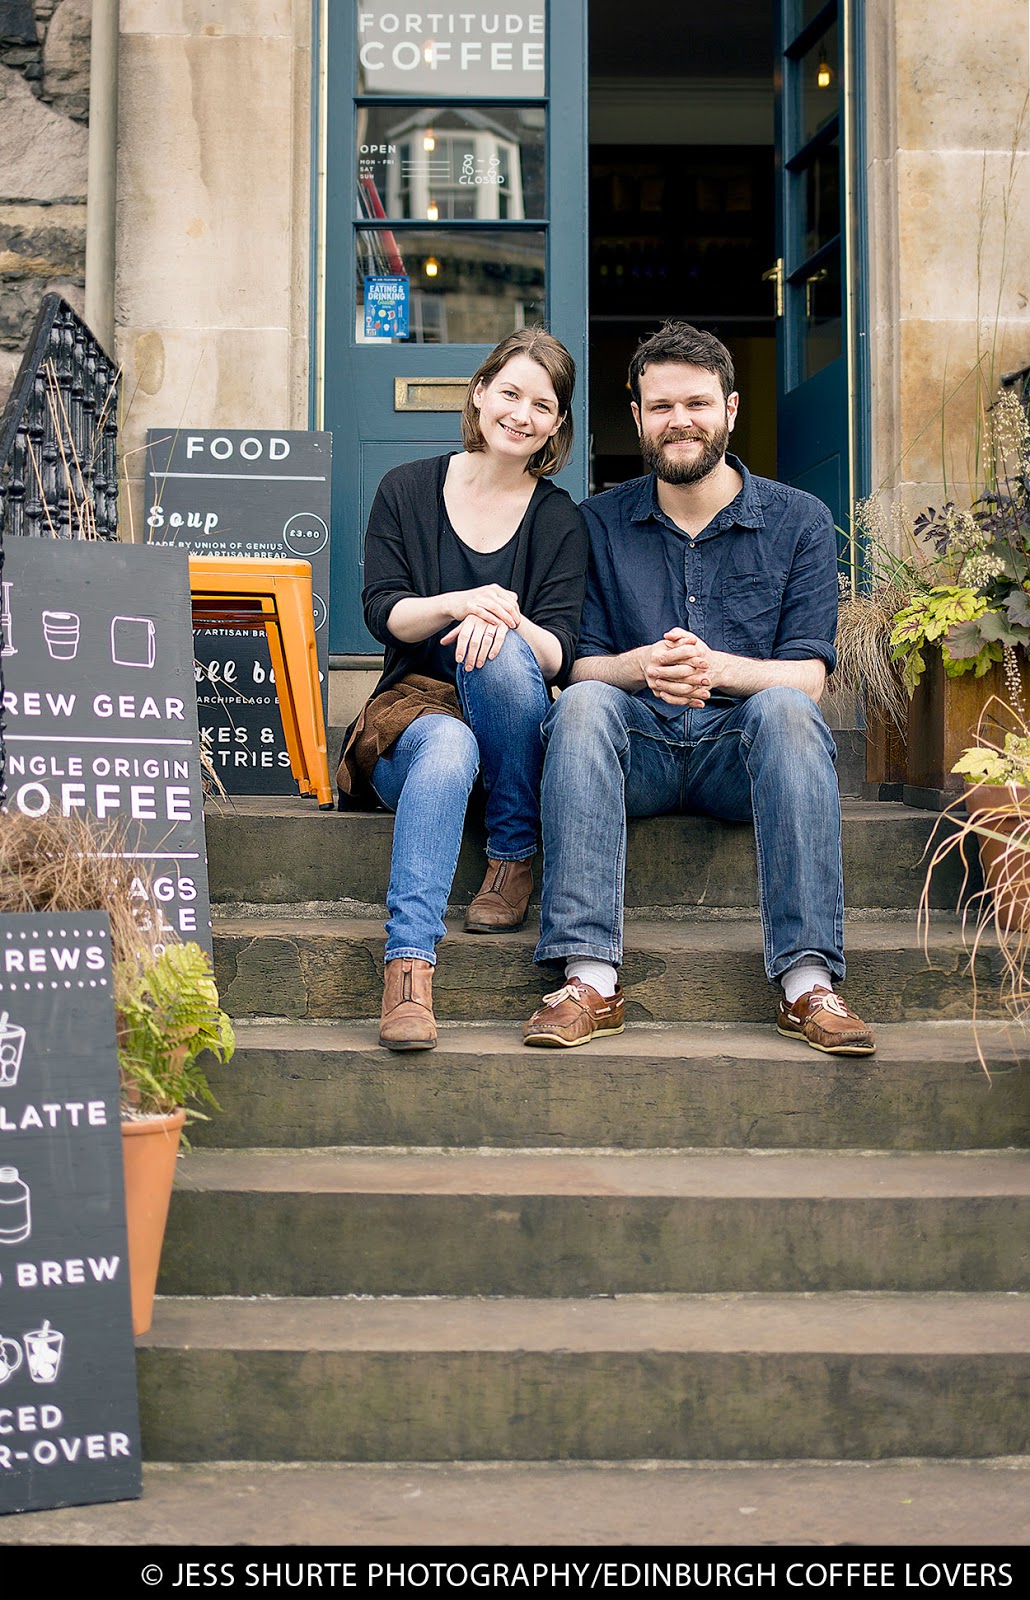 See the Edinburgh Coffee Hot Shot Gallery